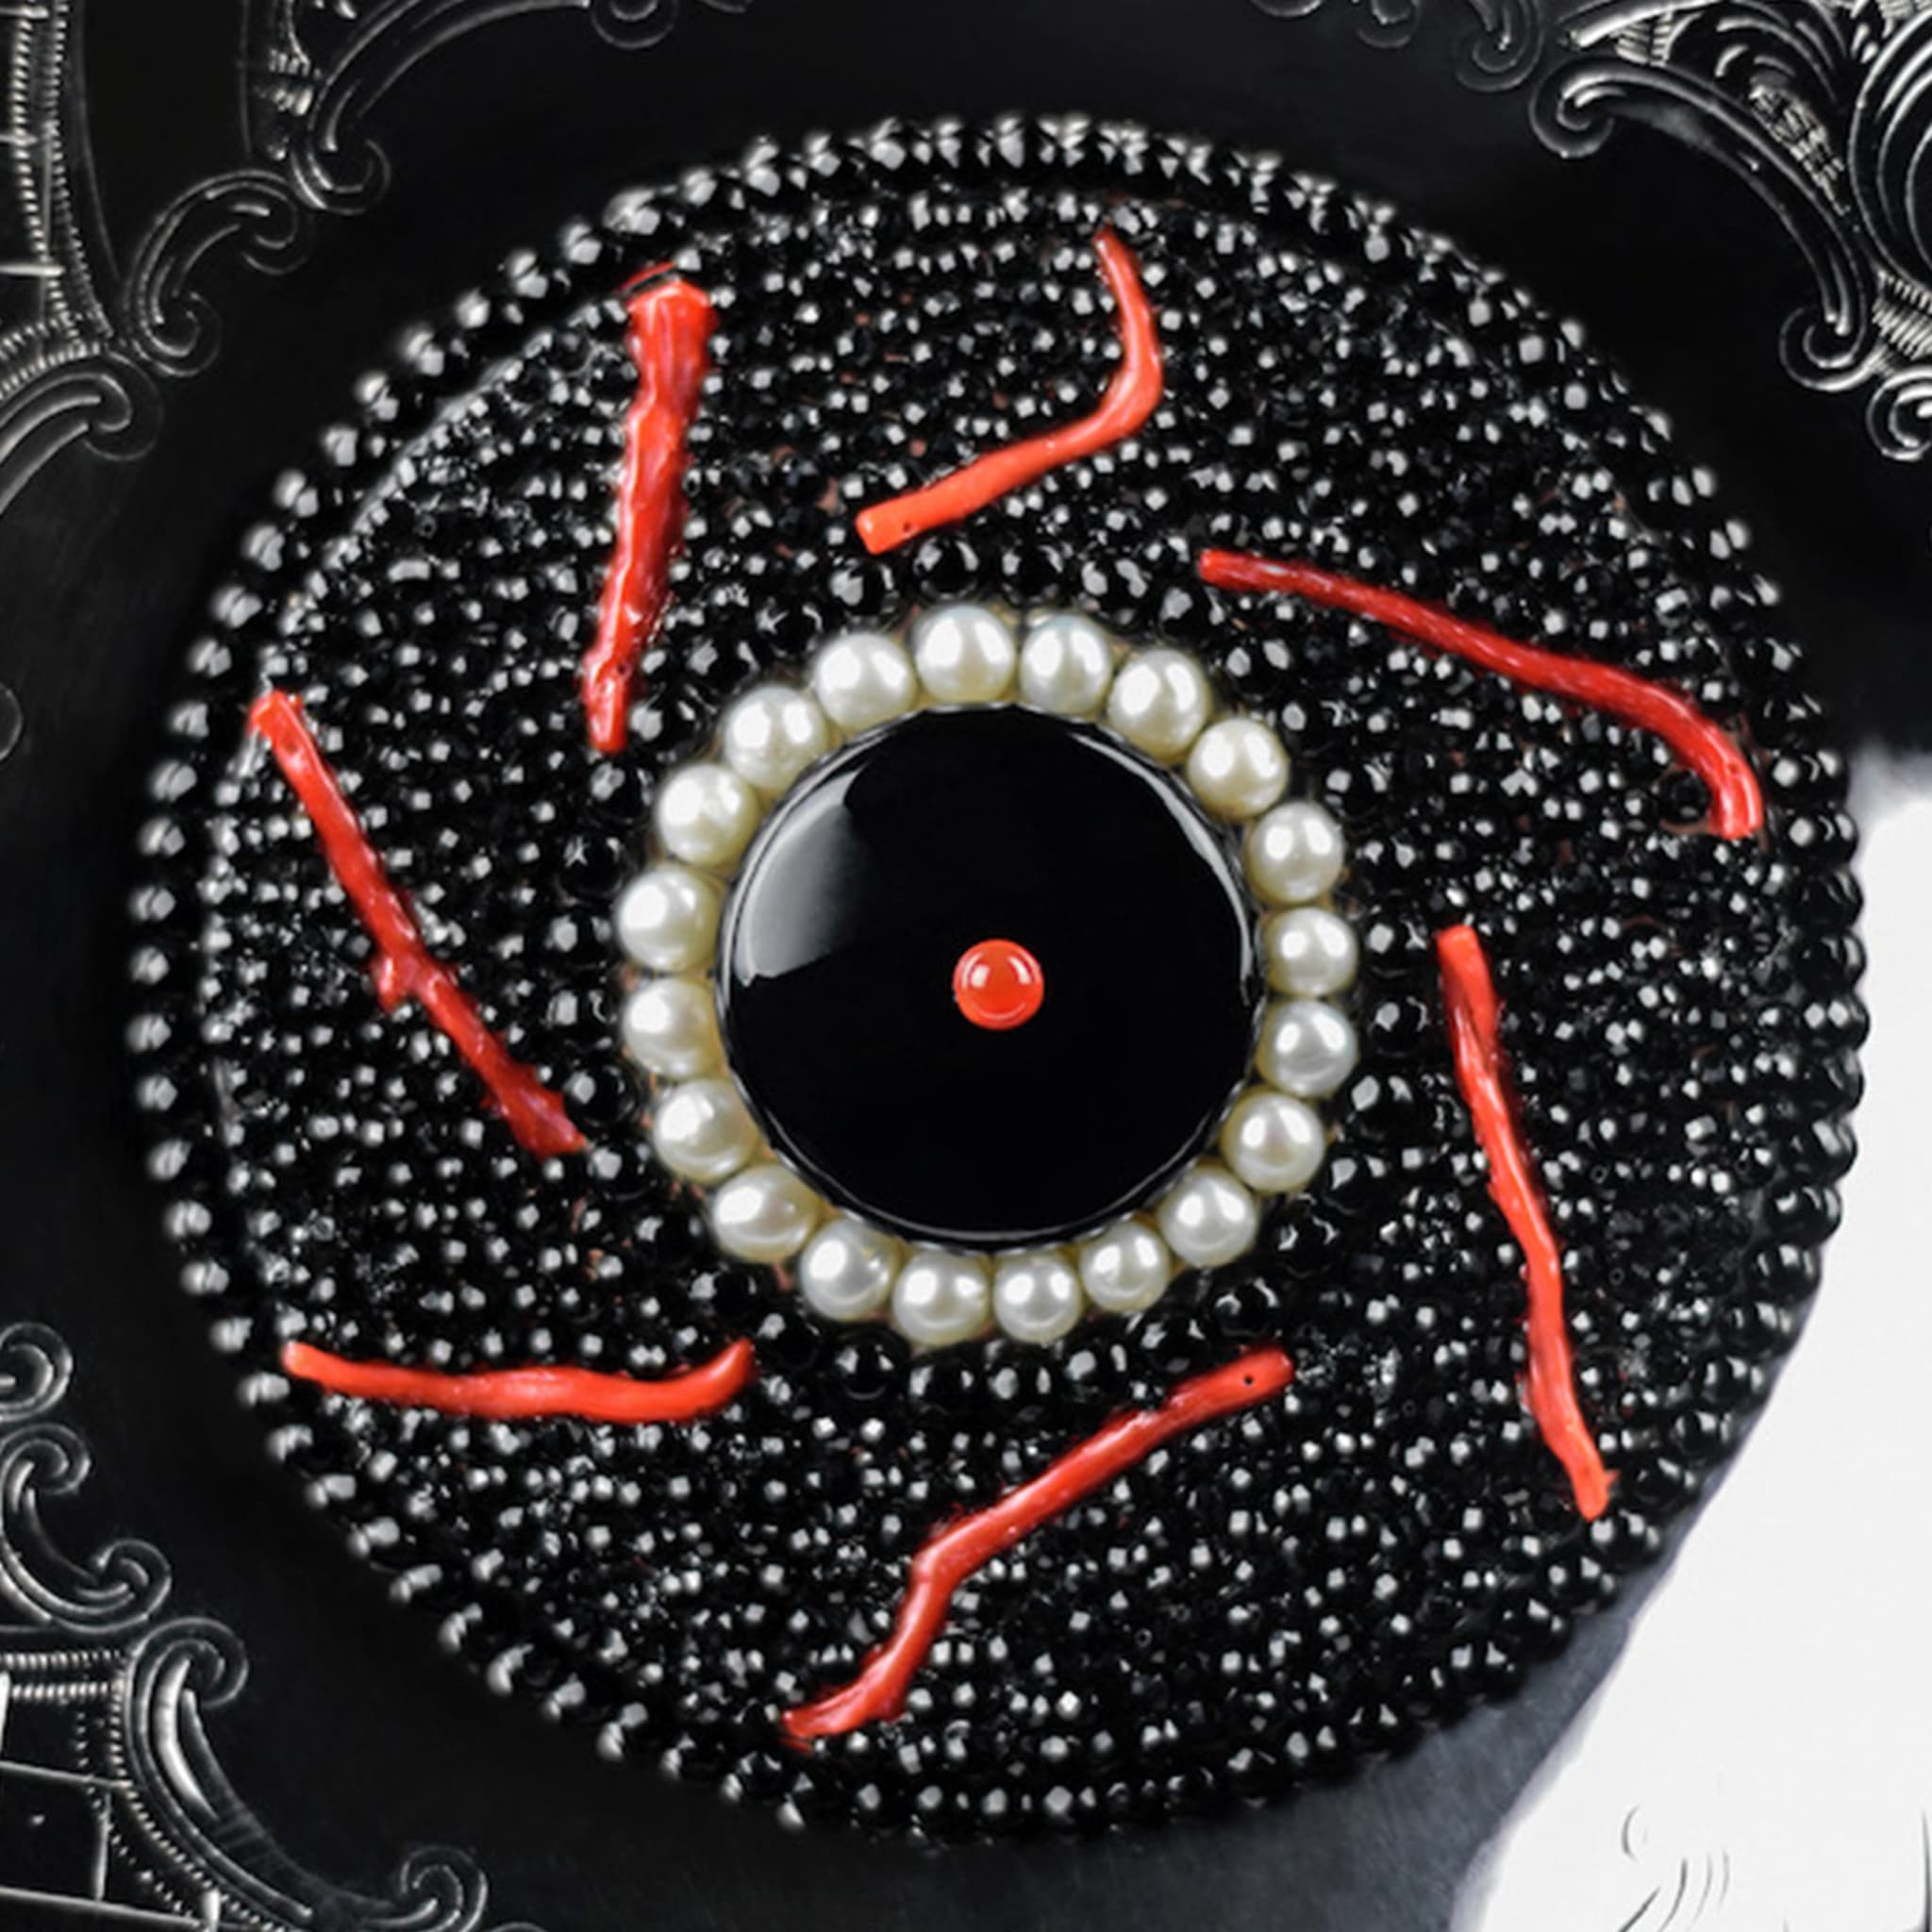 Black Sea Mandala Decorative Plate - Alternative view 2